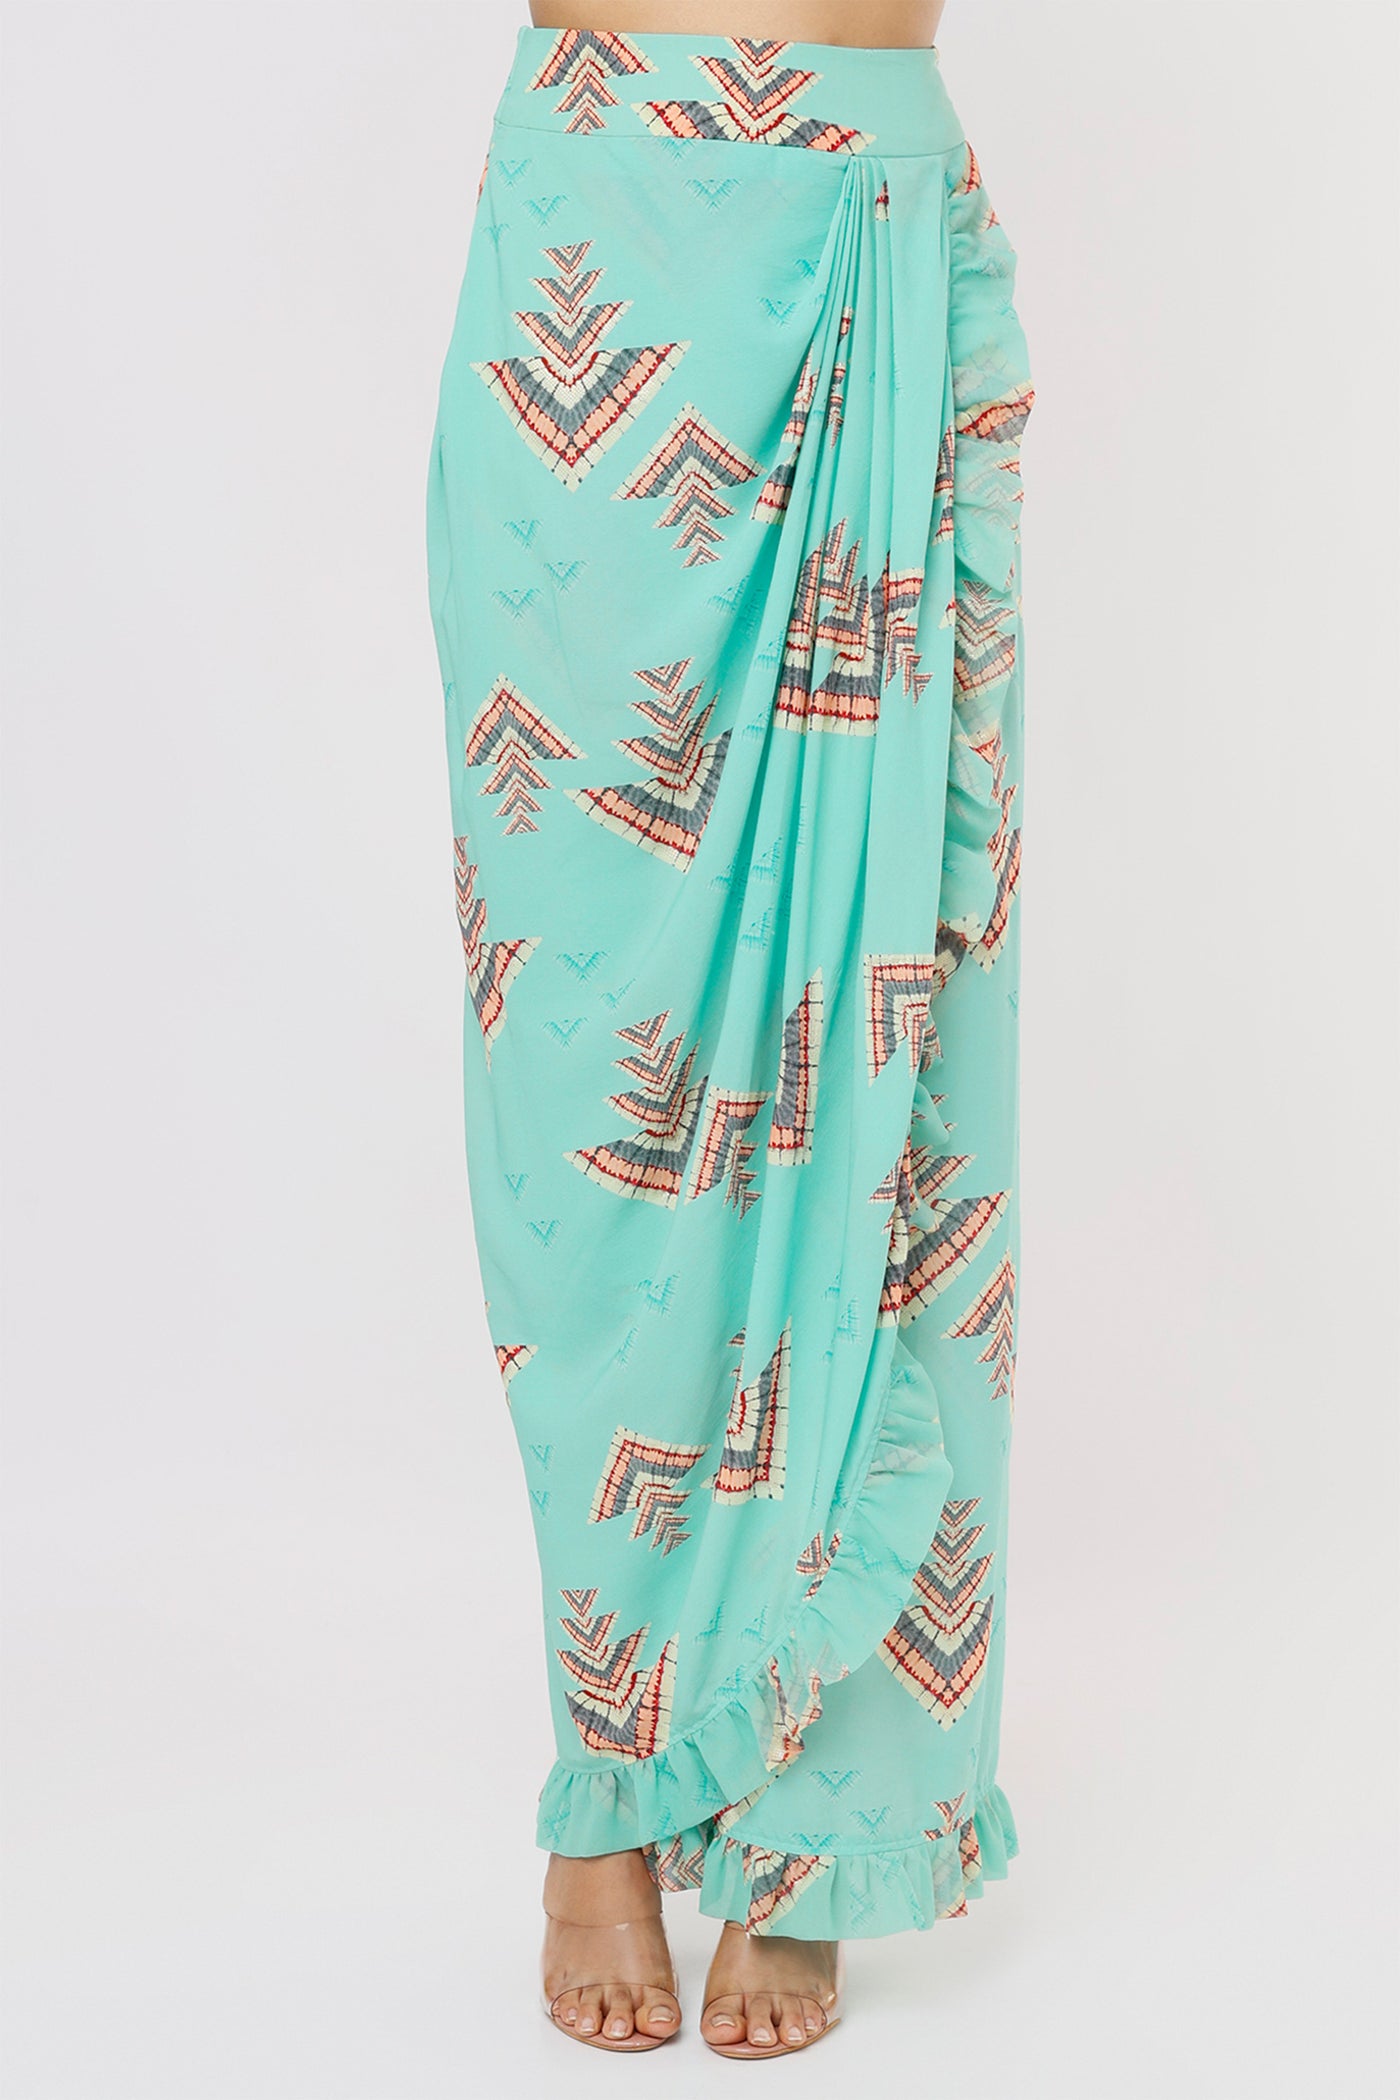 Gopi vaid Thea Wrap Skirt & Bustier aqua blue festive Indian designer wear online shopping melange singapore